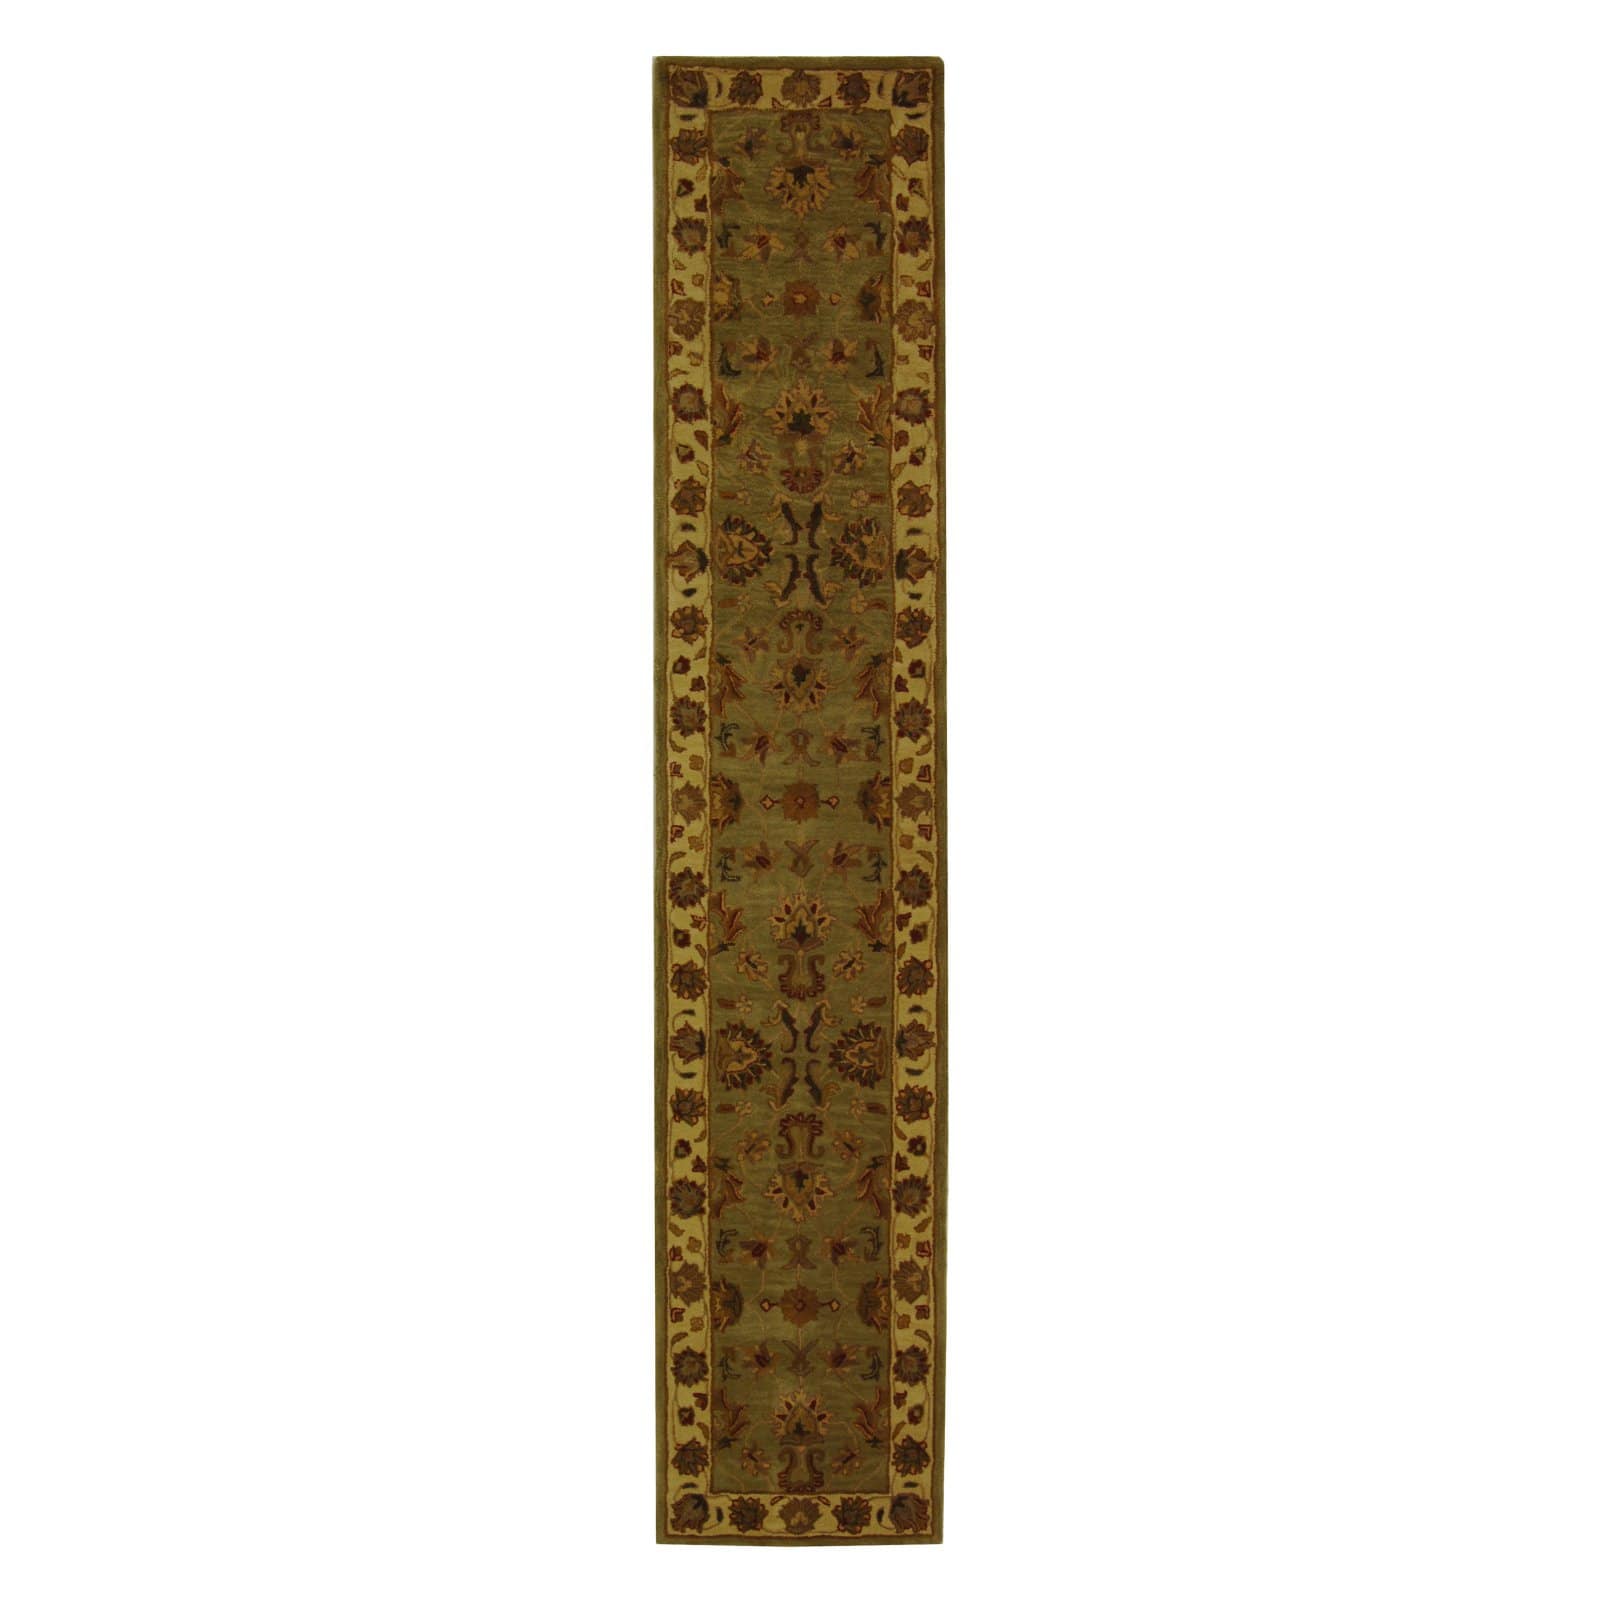 SAFAVIEH Heritage Regis Traditional Wool Area Rug, Green/Gold, 9'6" x 13'6" - image 3 of 10